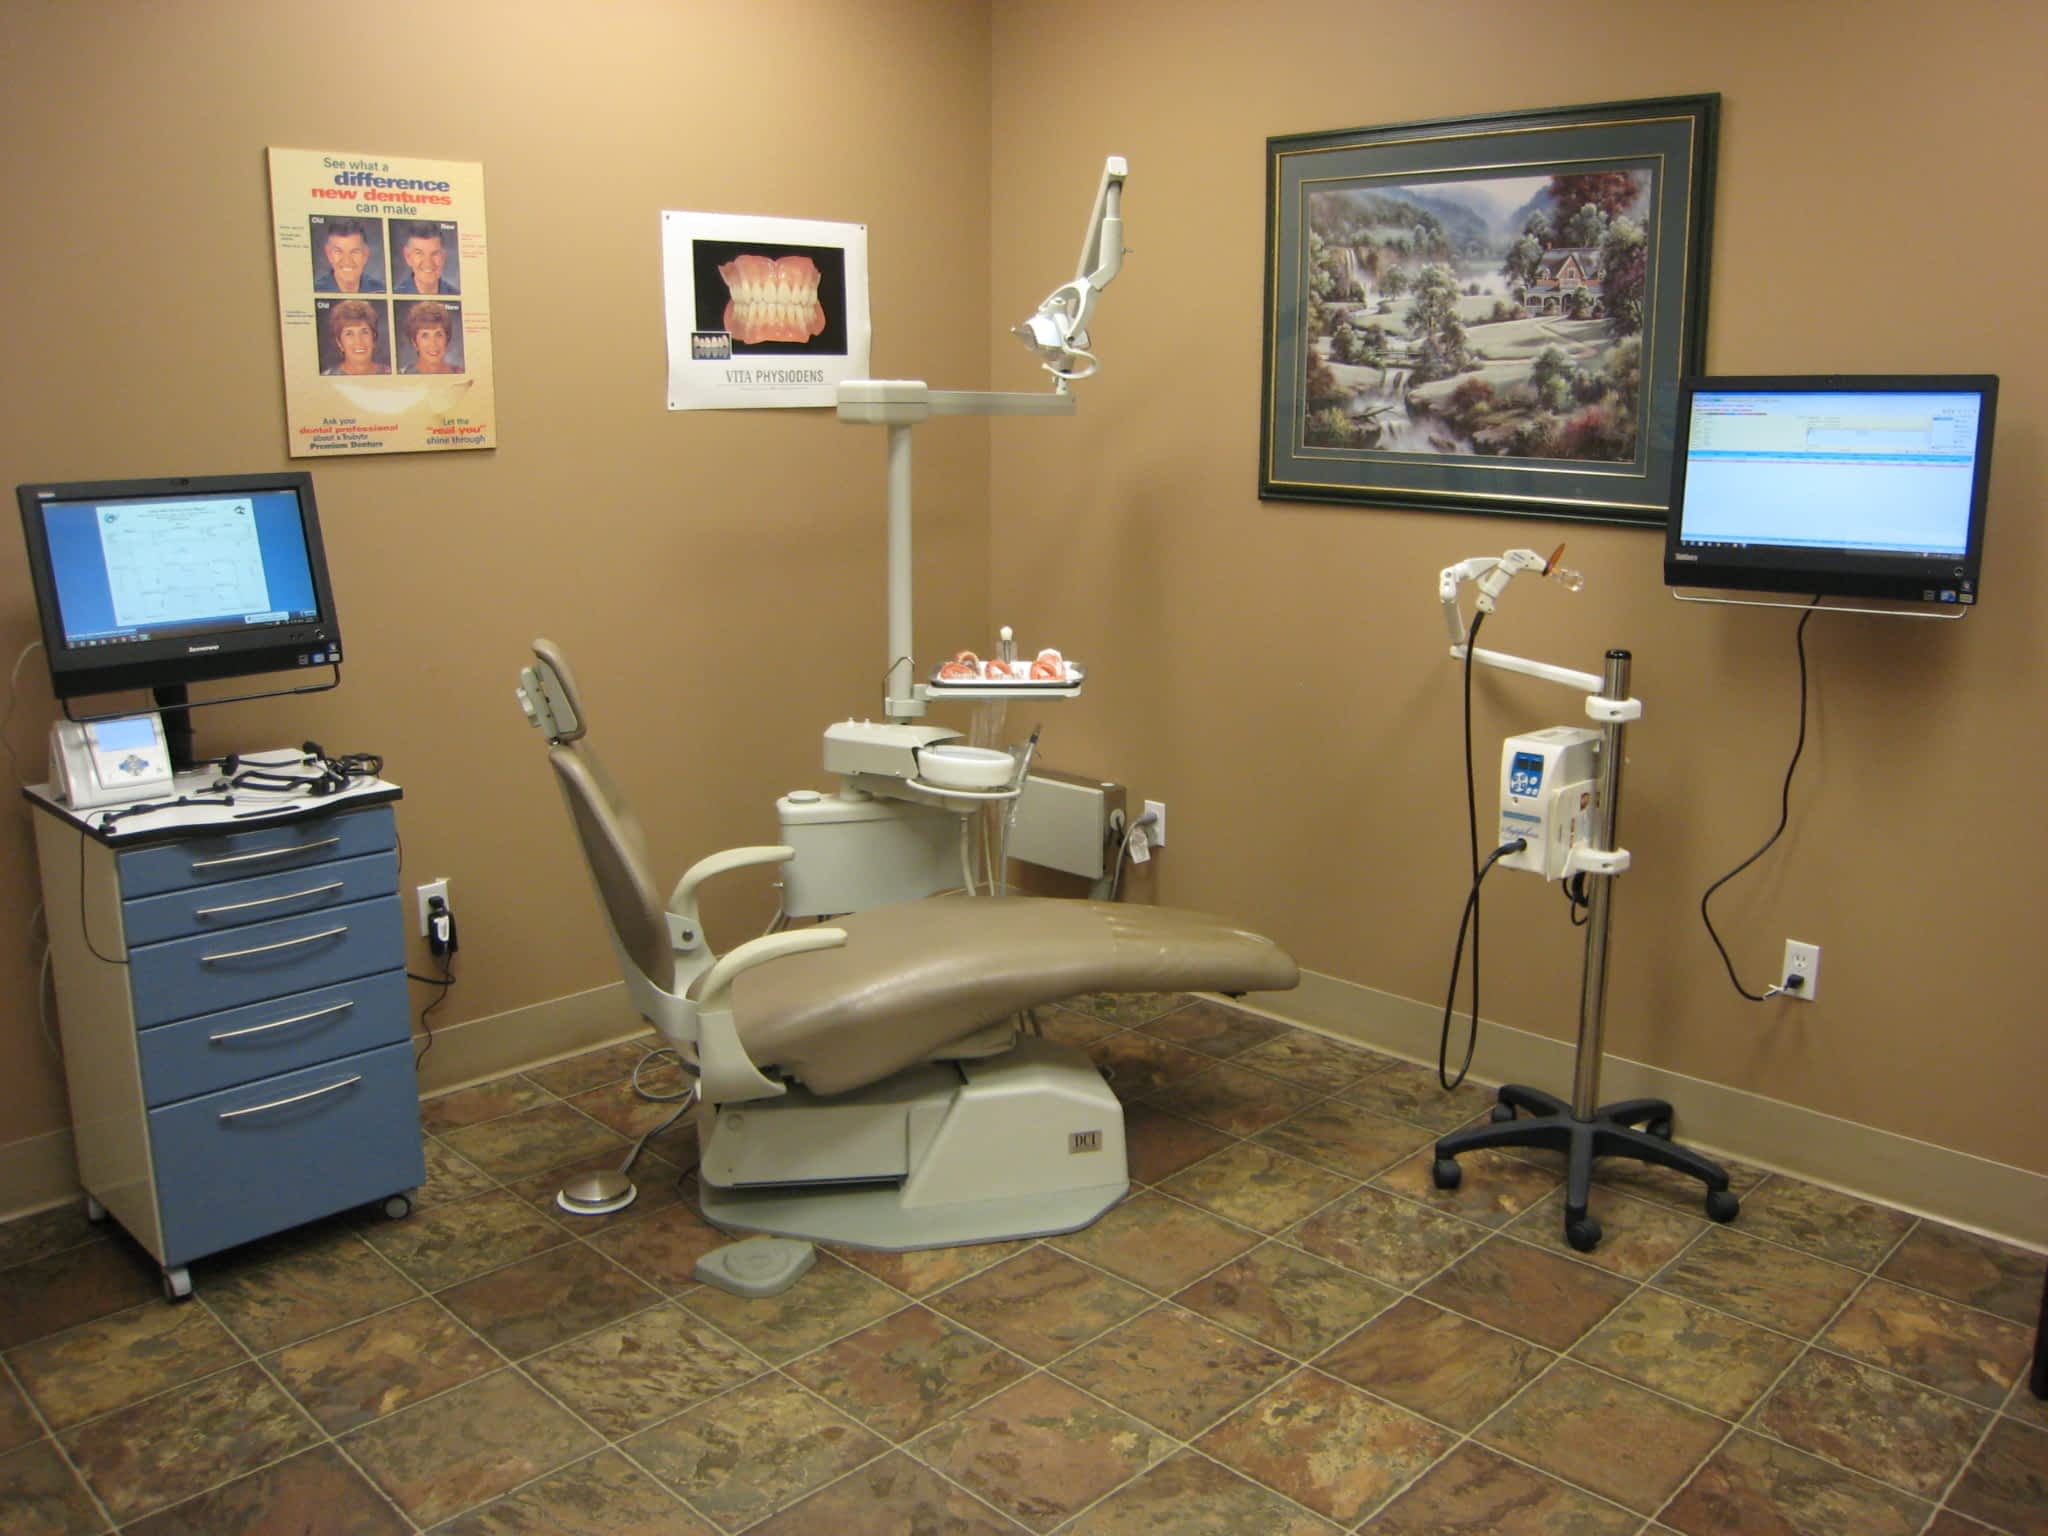 photo The Denture & Implant Centre